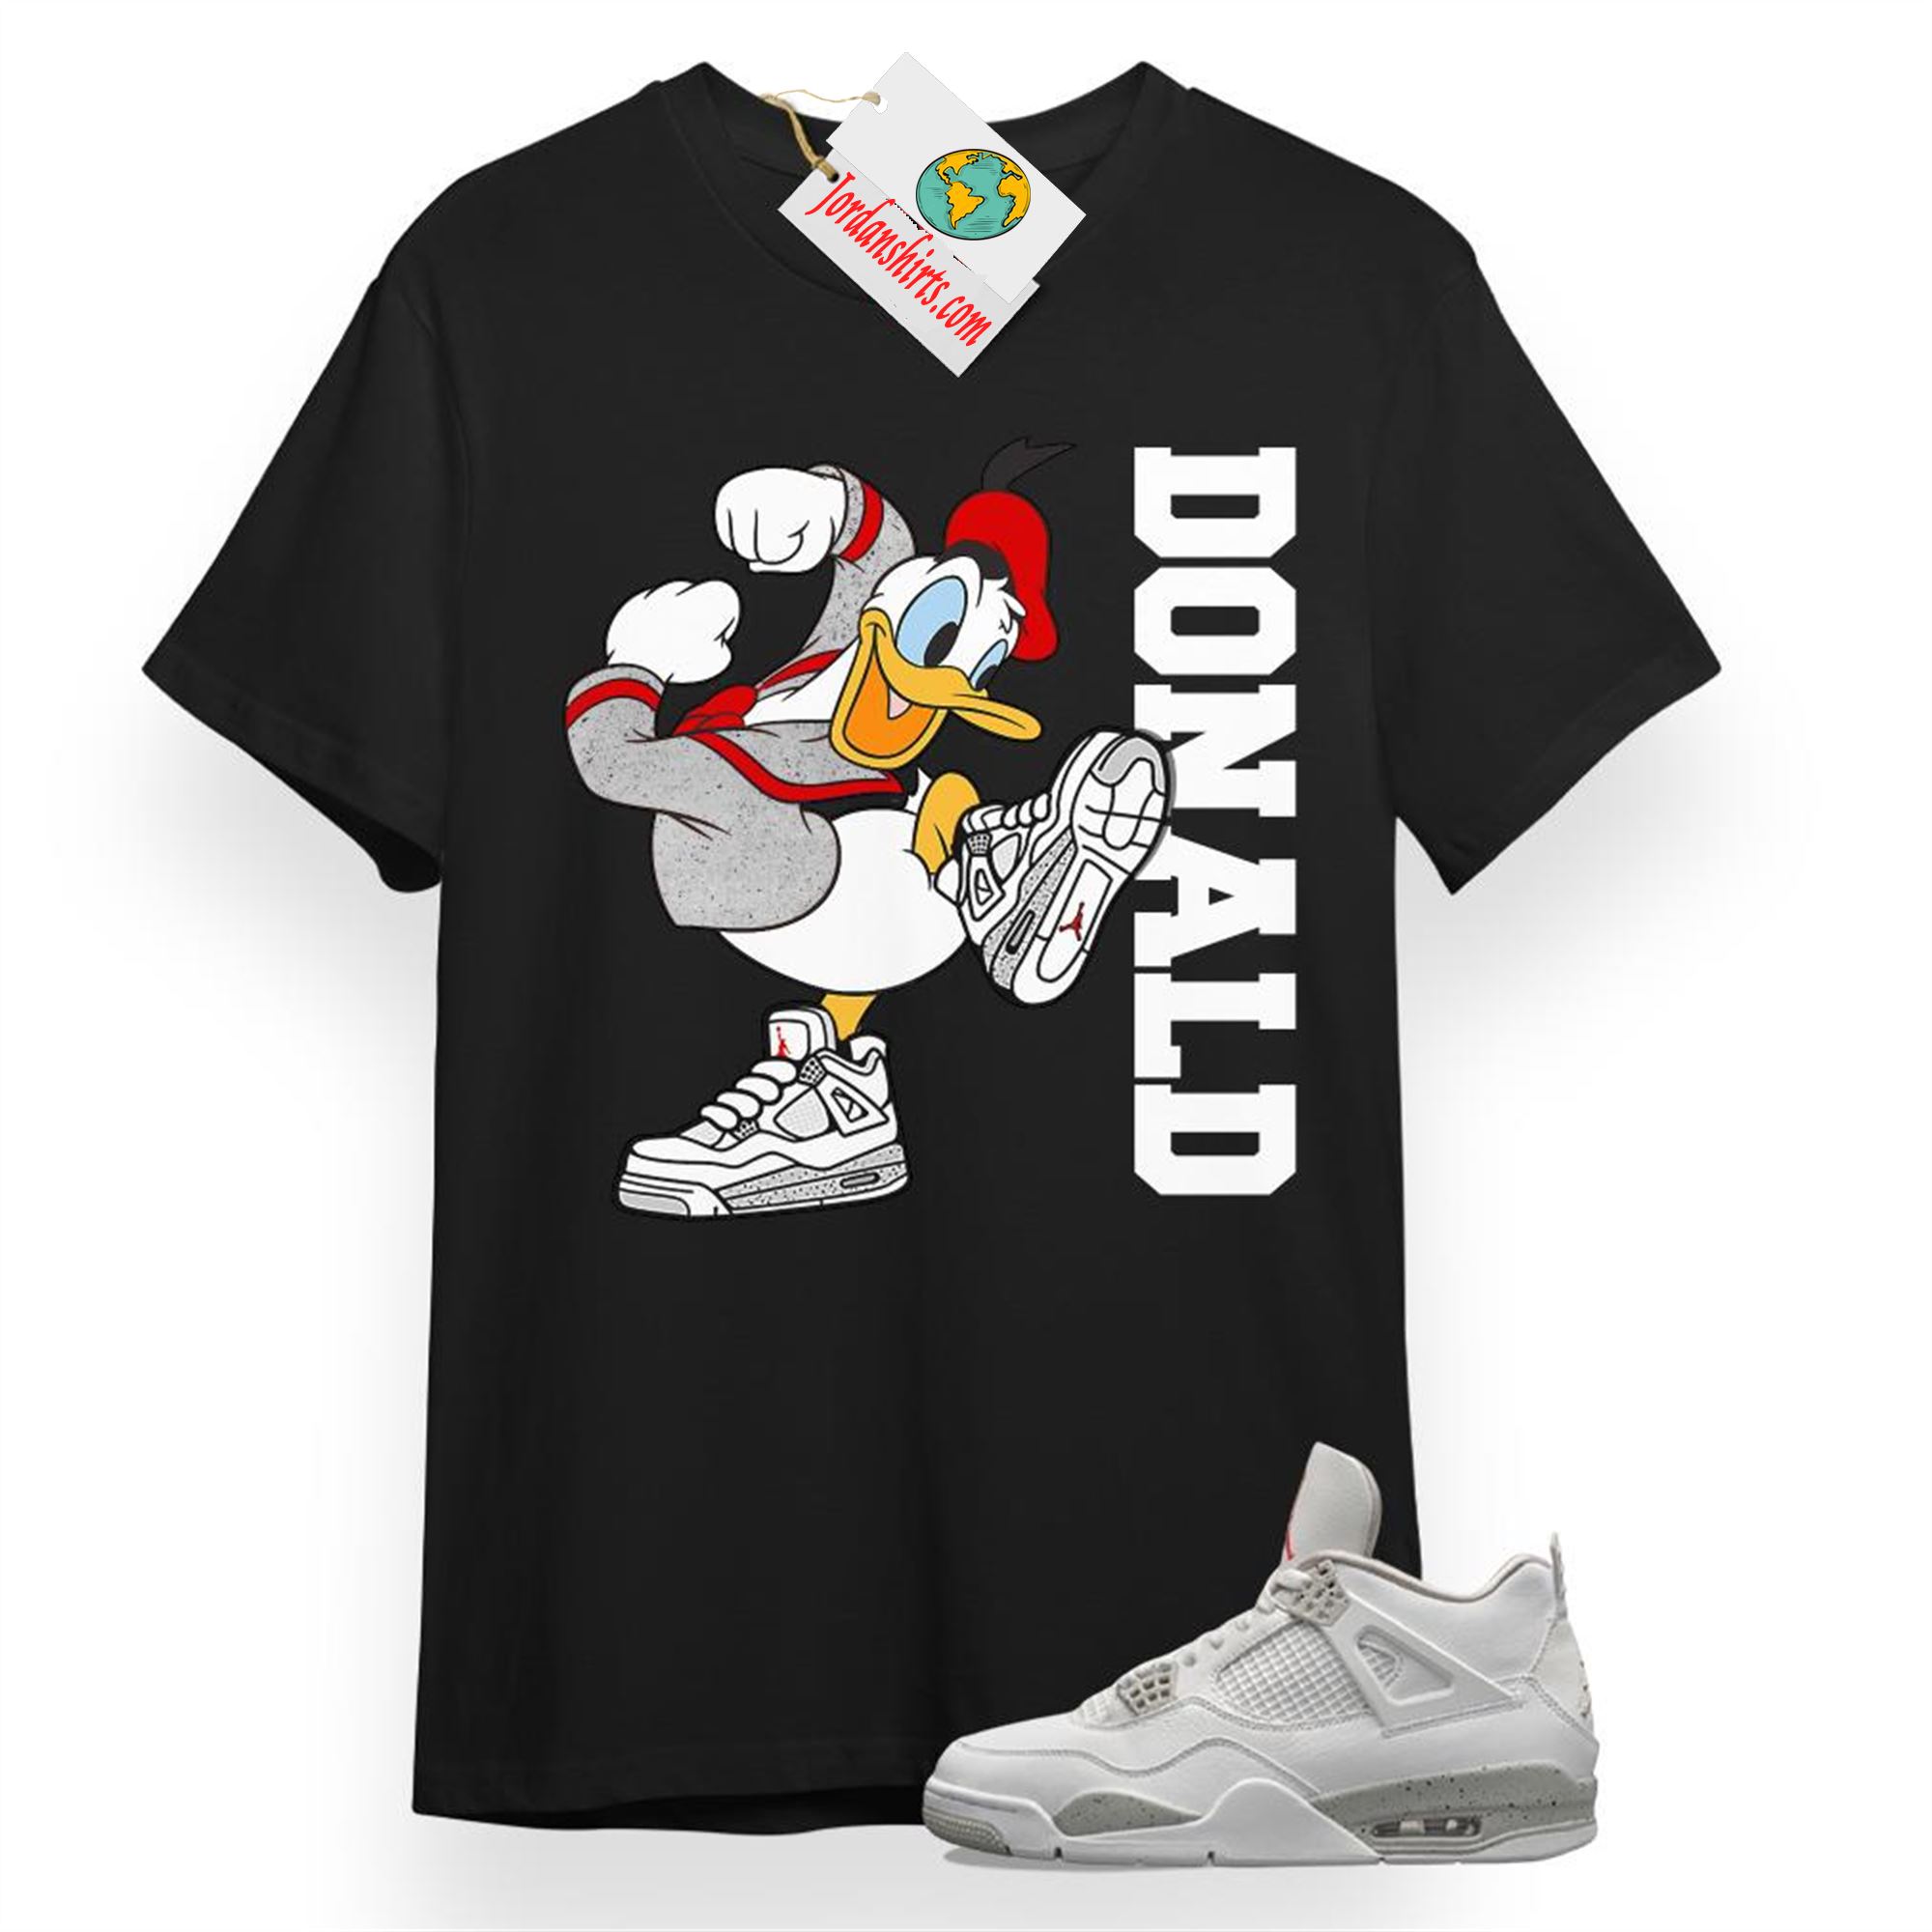 Jordan 4 Shirt, Donald Black T-shirt Air Jordan 4 Oreo 4s Plus Size Up To 5xl